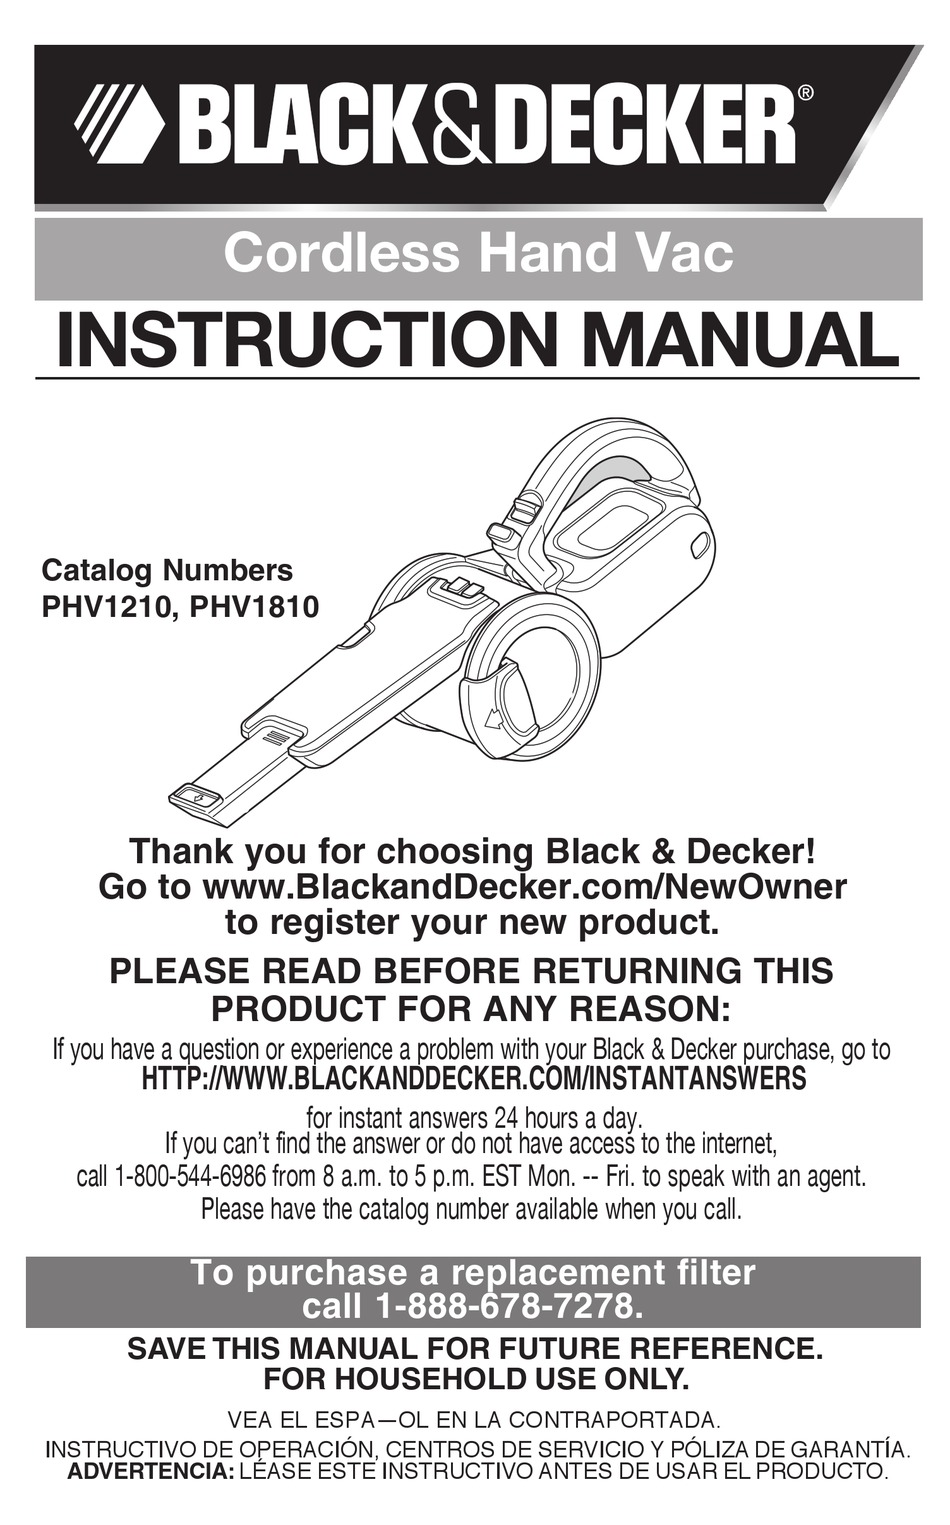 BLACK AND DECKER HHVK320J Cordless Vacuum Instruction Manual